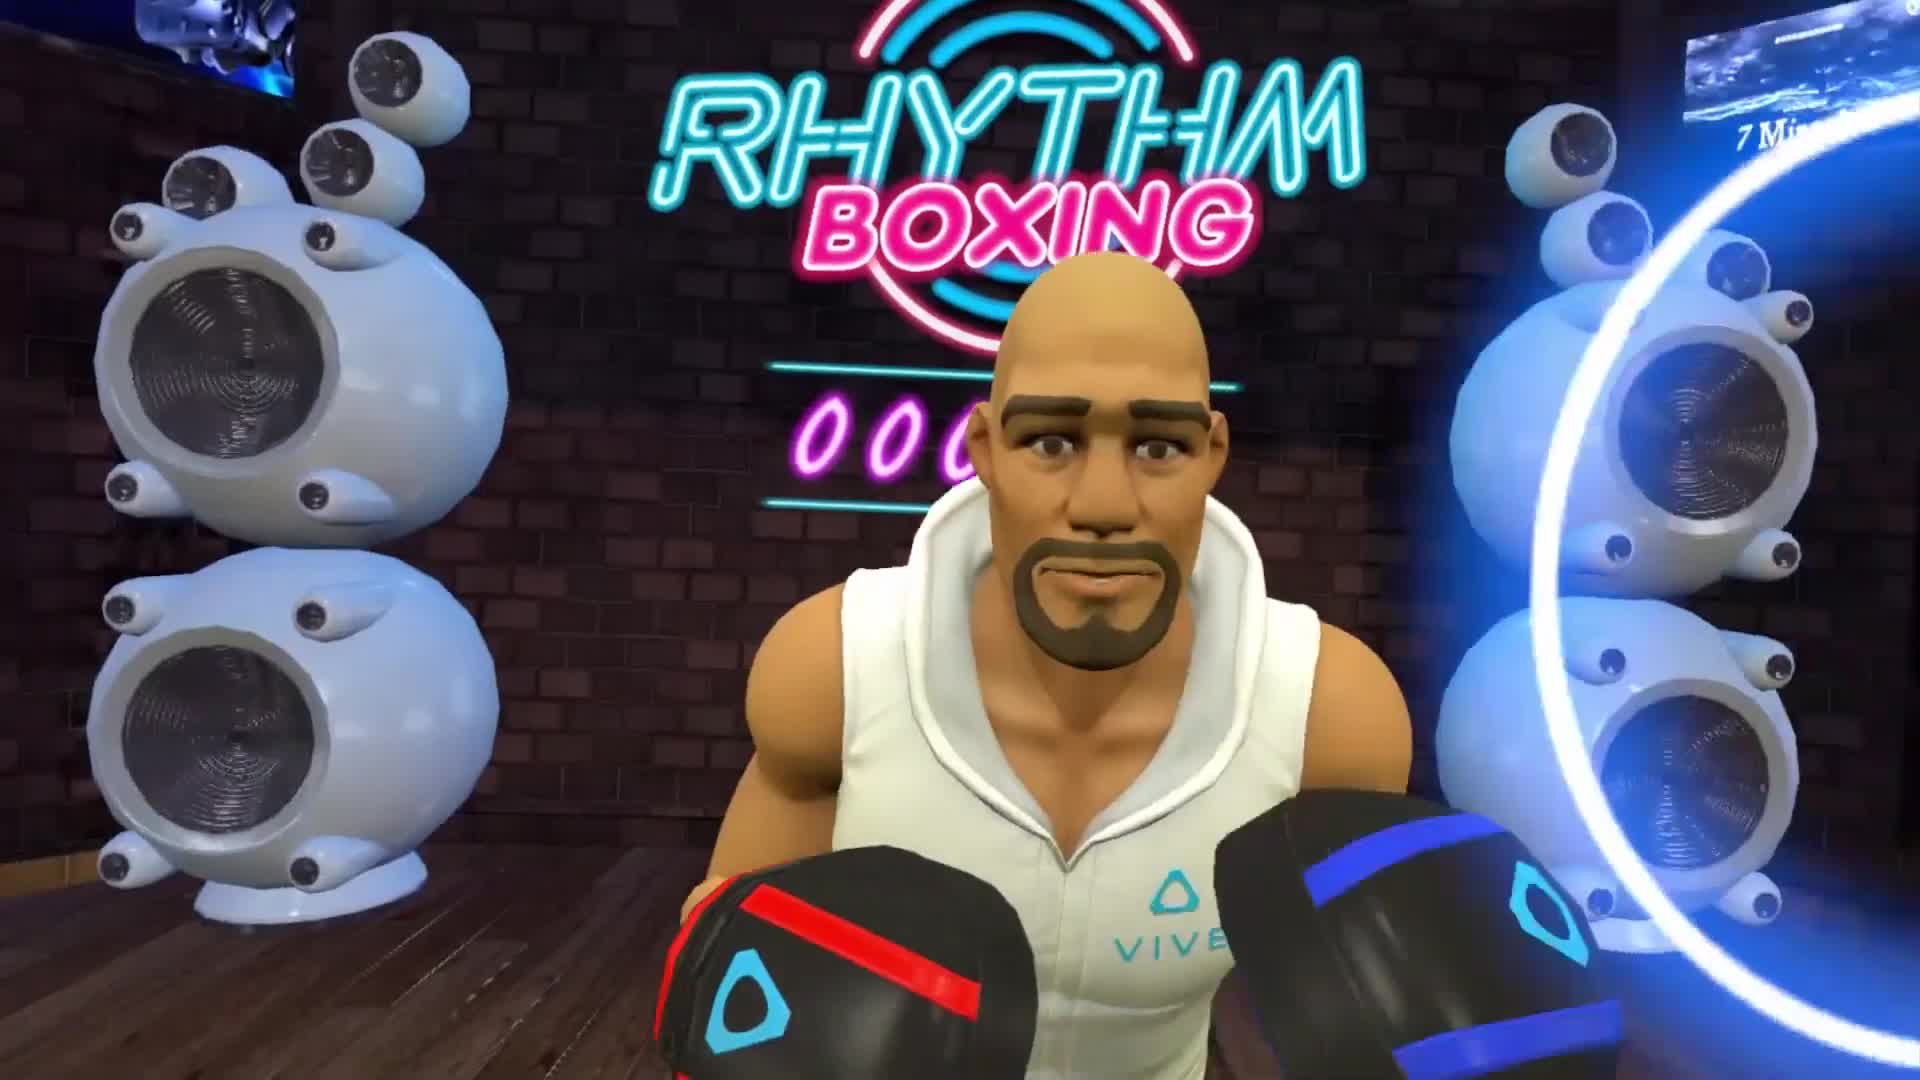 VR titul Rhythm Boxing je dostupn na Viveporte